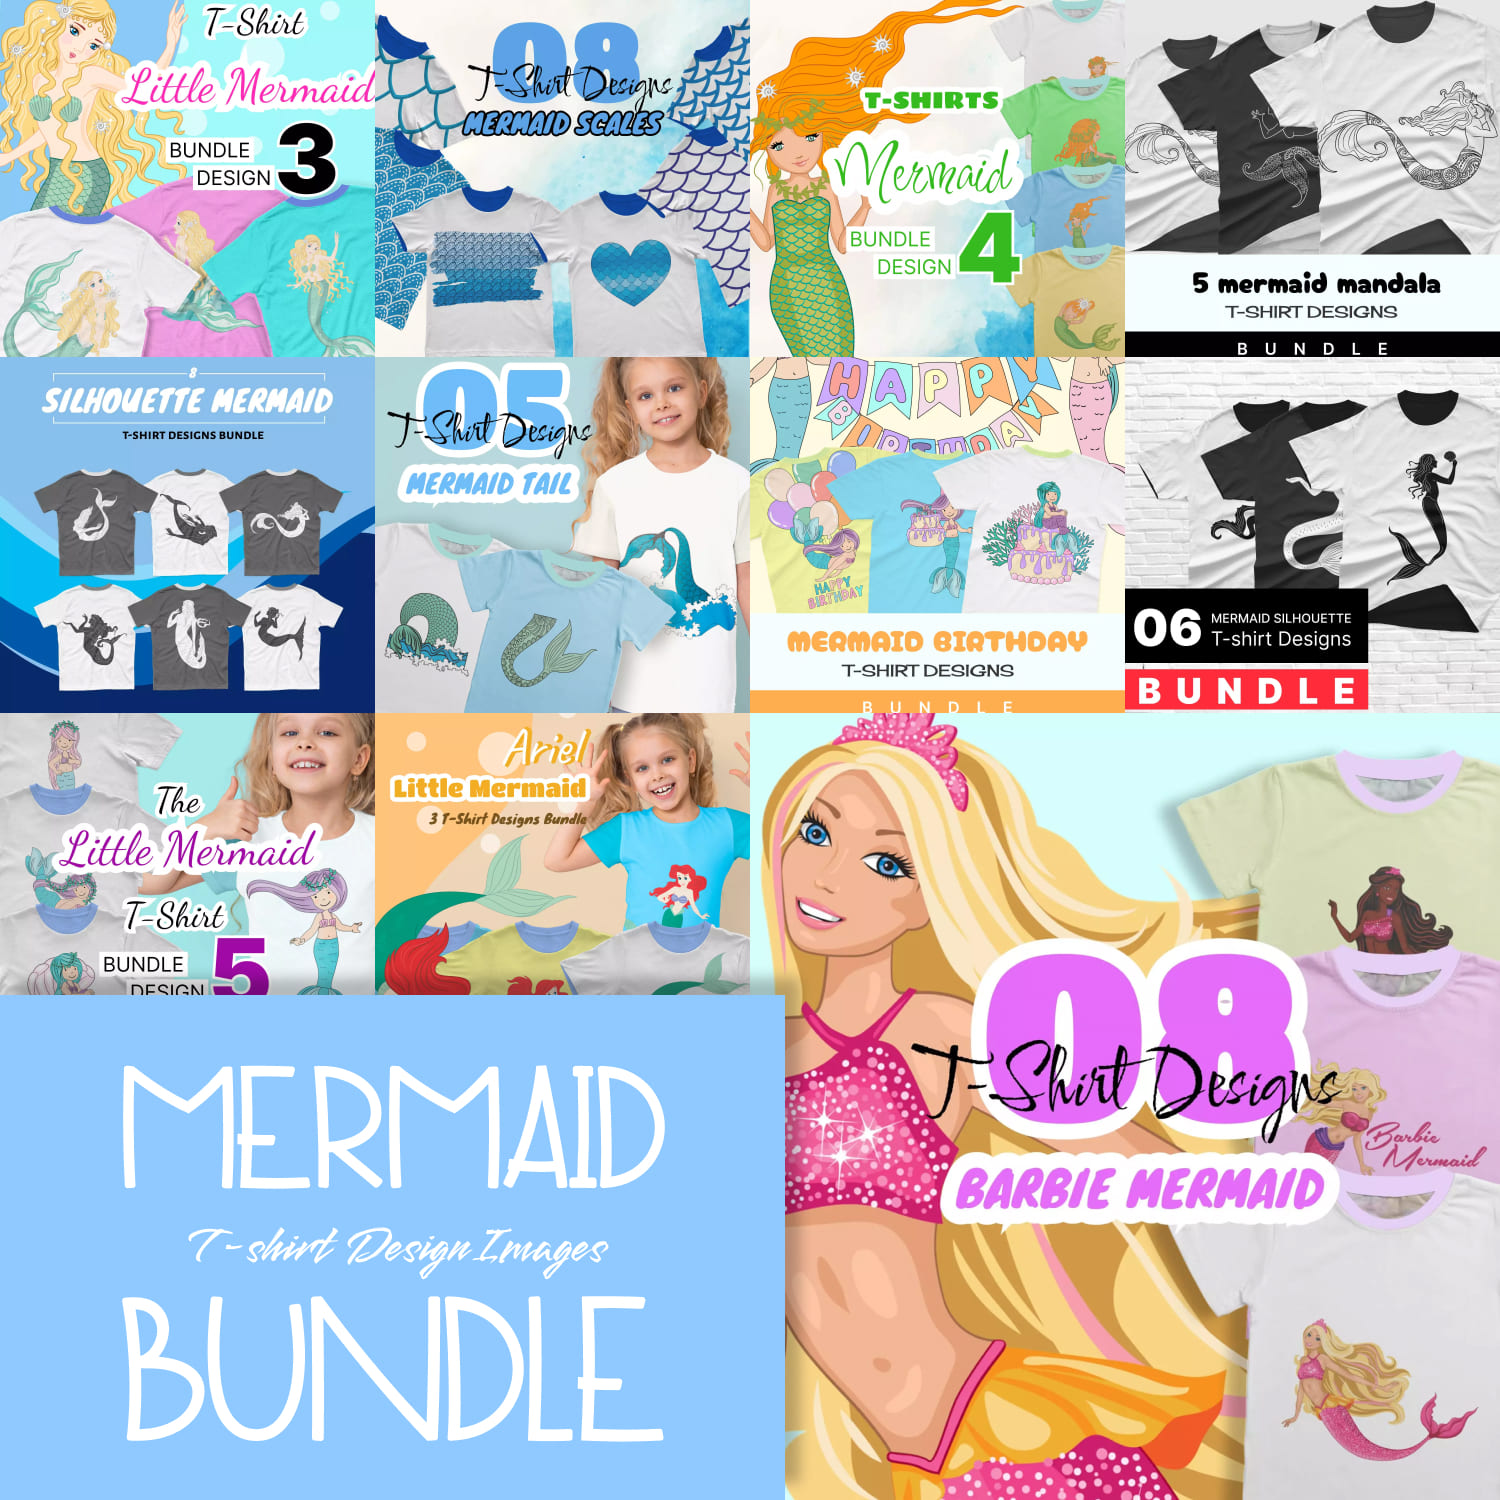 Mermaid T-shirt Design Images Bundle.